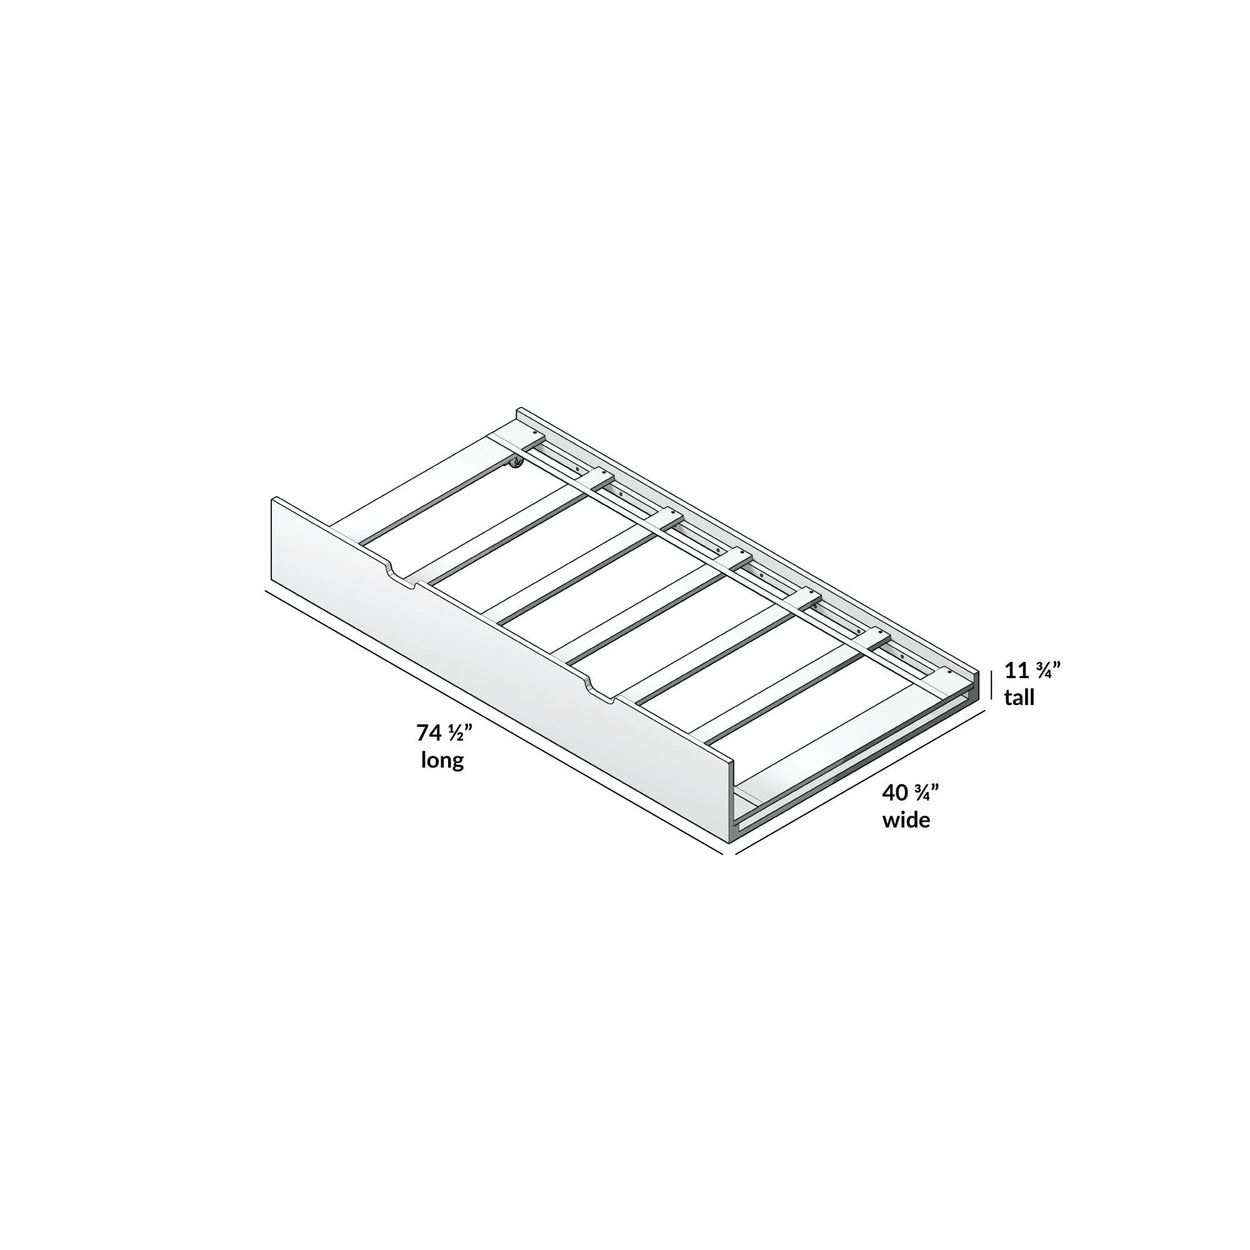 175261-121 : Component Trundle Bed w/ 7 pcs Slat Roll and Rubber Castors, Grey